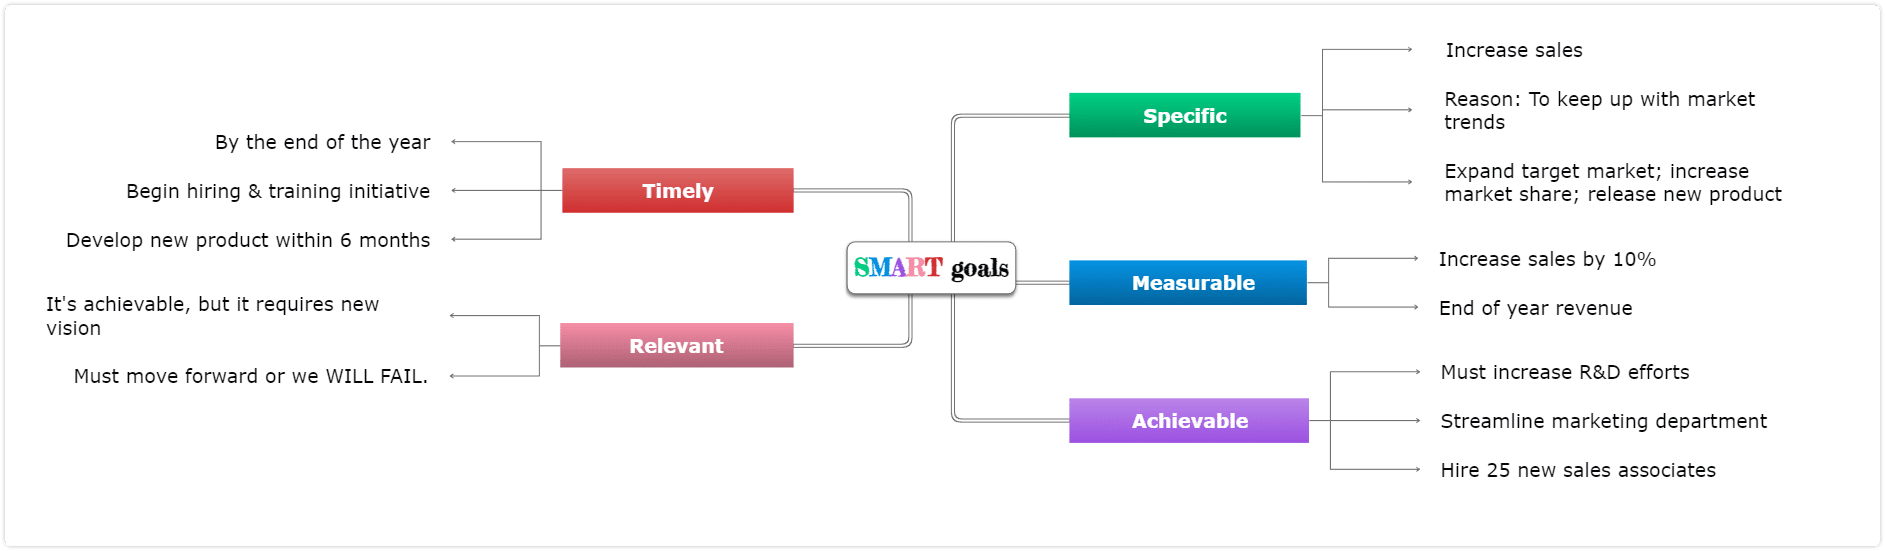 data visualization smart goals template